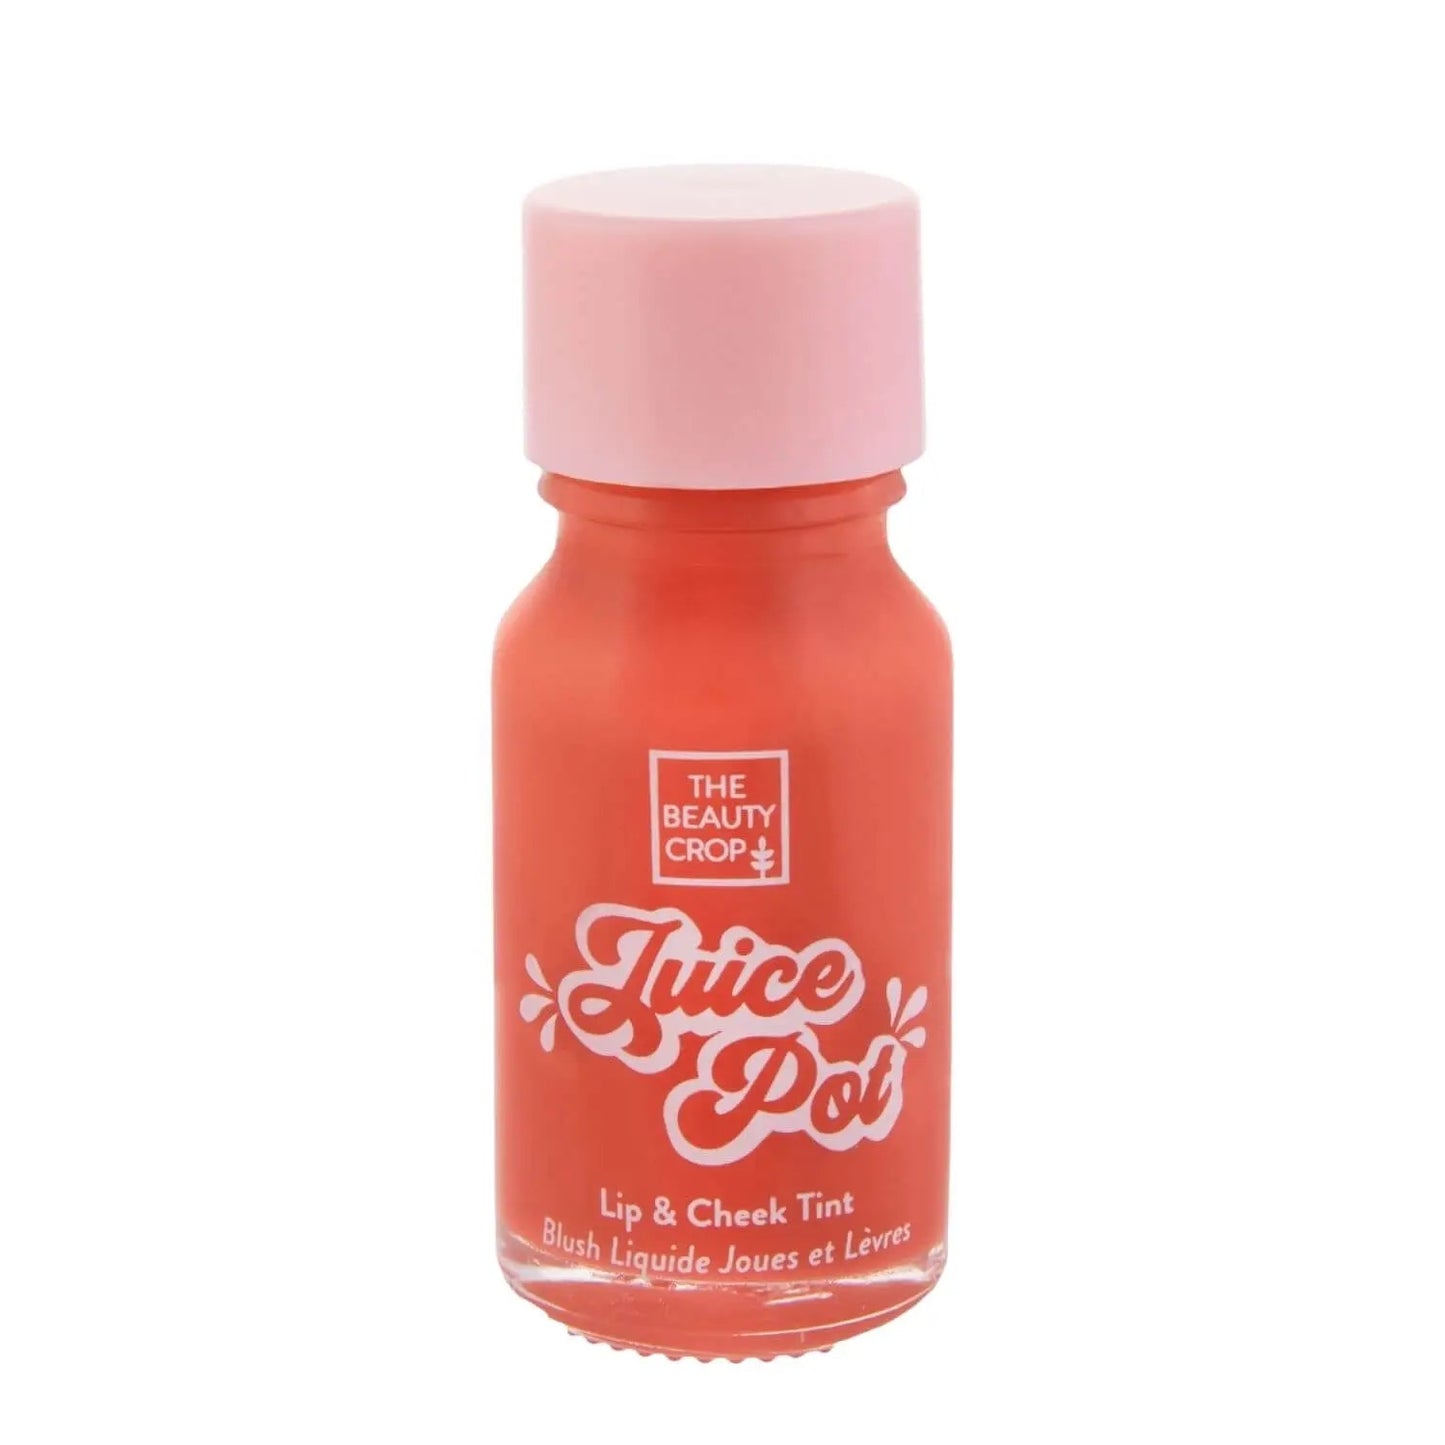 Juice Pot Lip & Cheek Tint - Spellbound